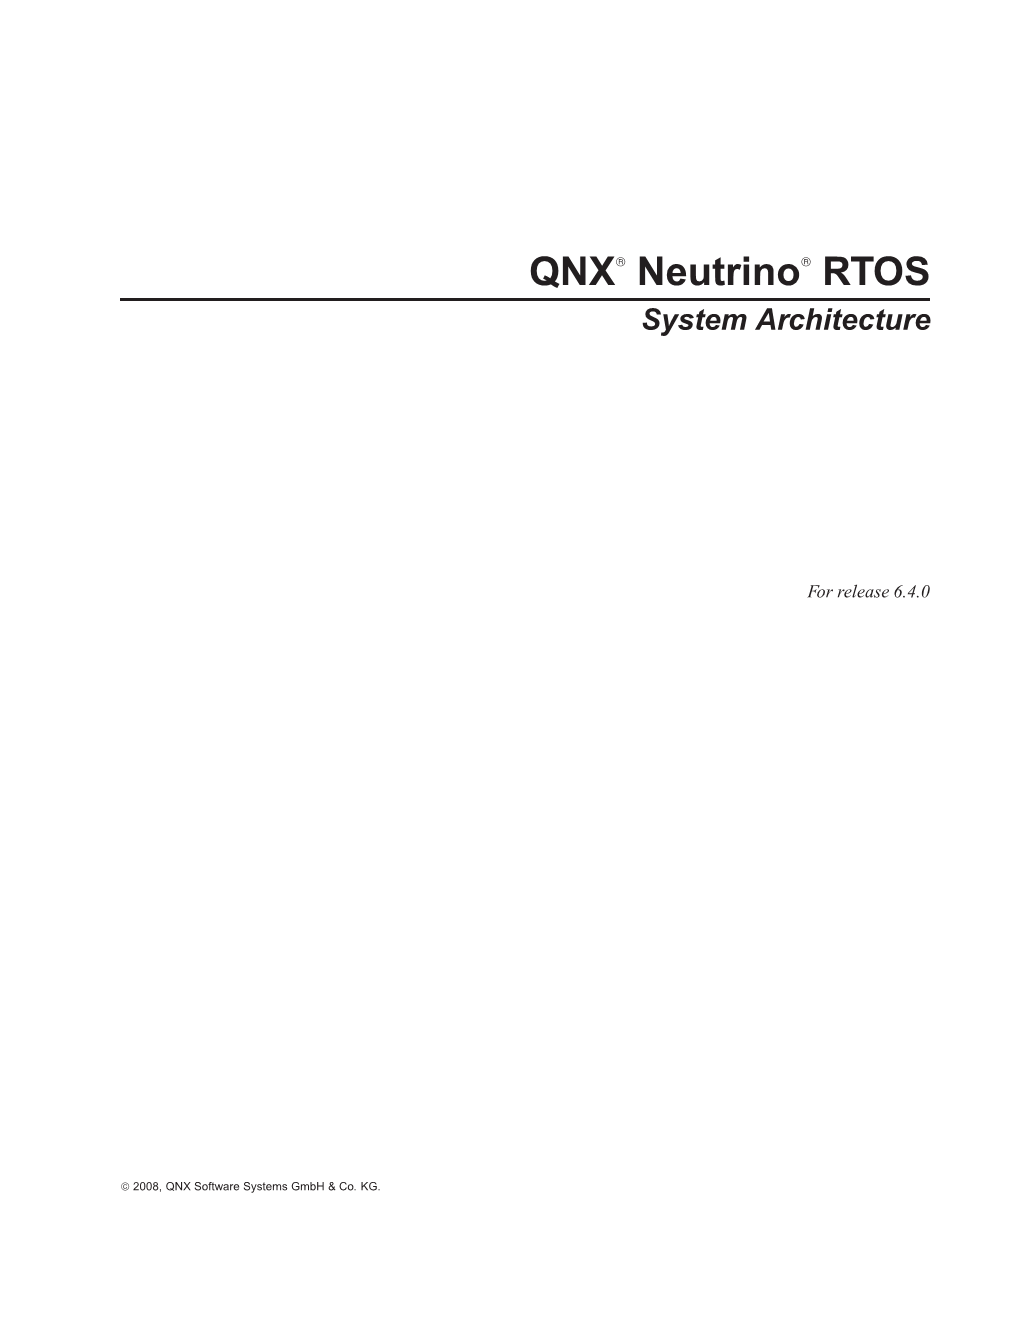 QNX® Neutrino® RTOS System Architecture